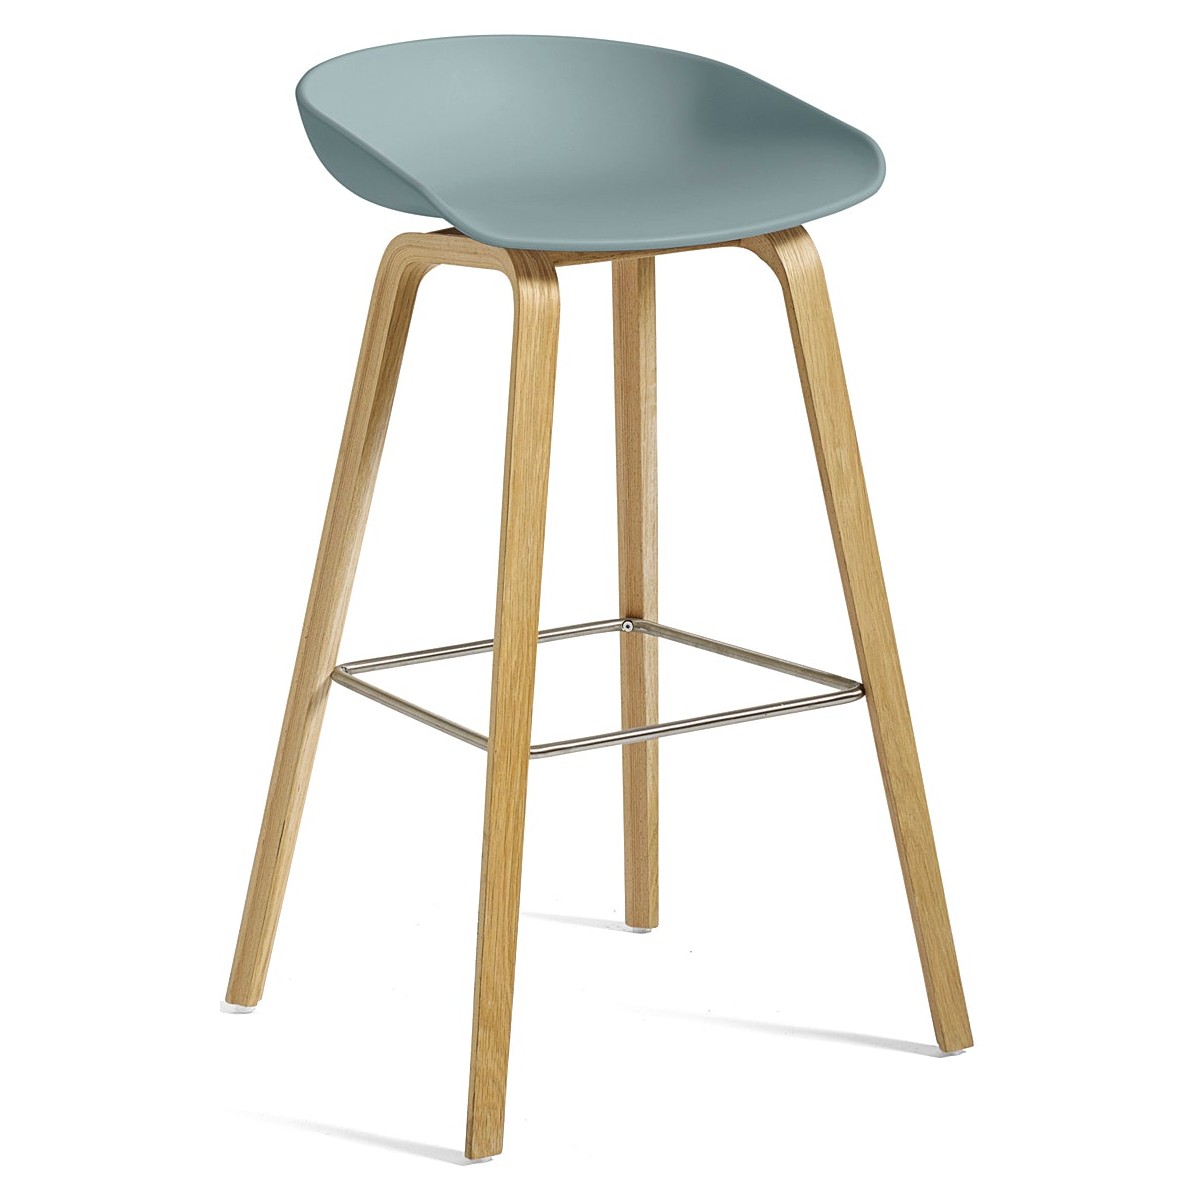 AAS32 Bar stool Dusty blue shell + Oak base